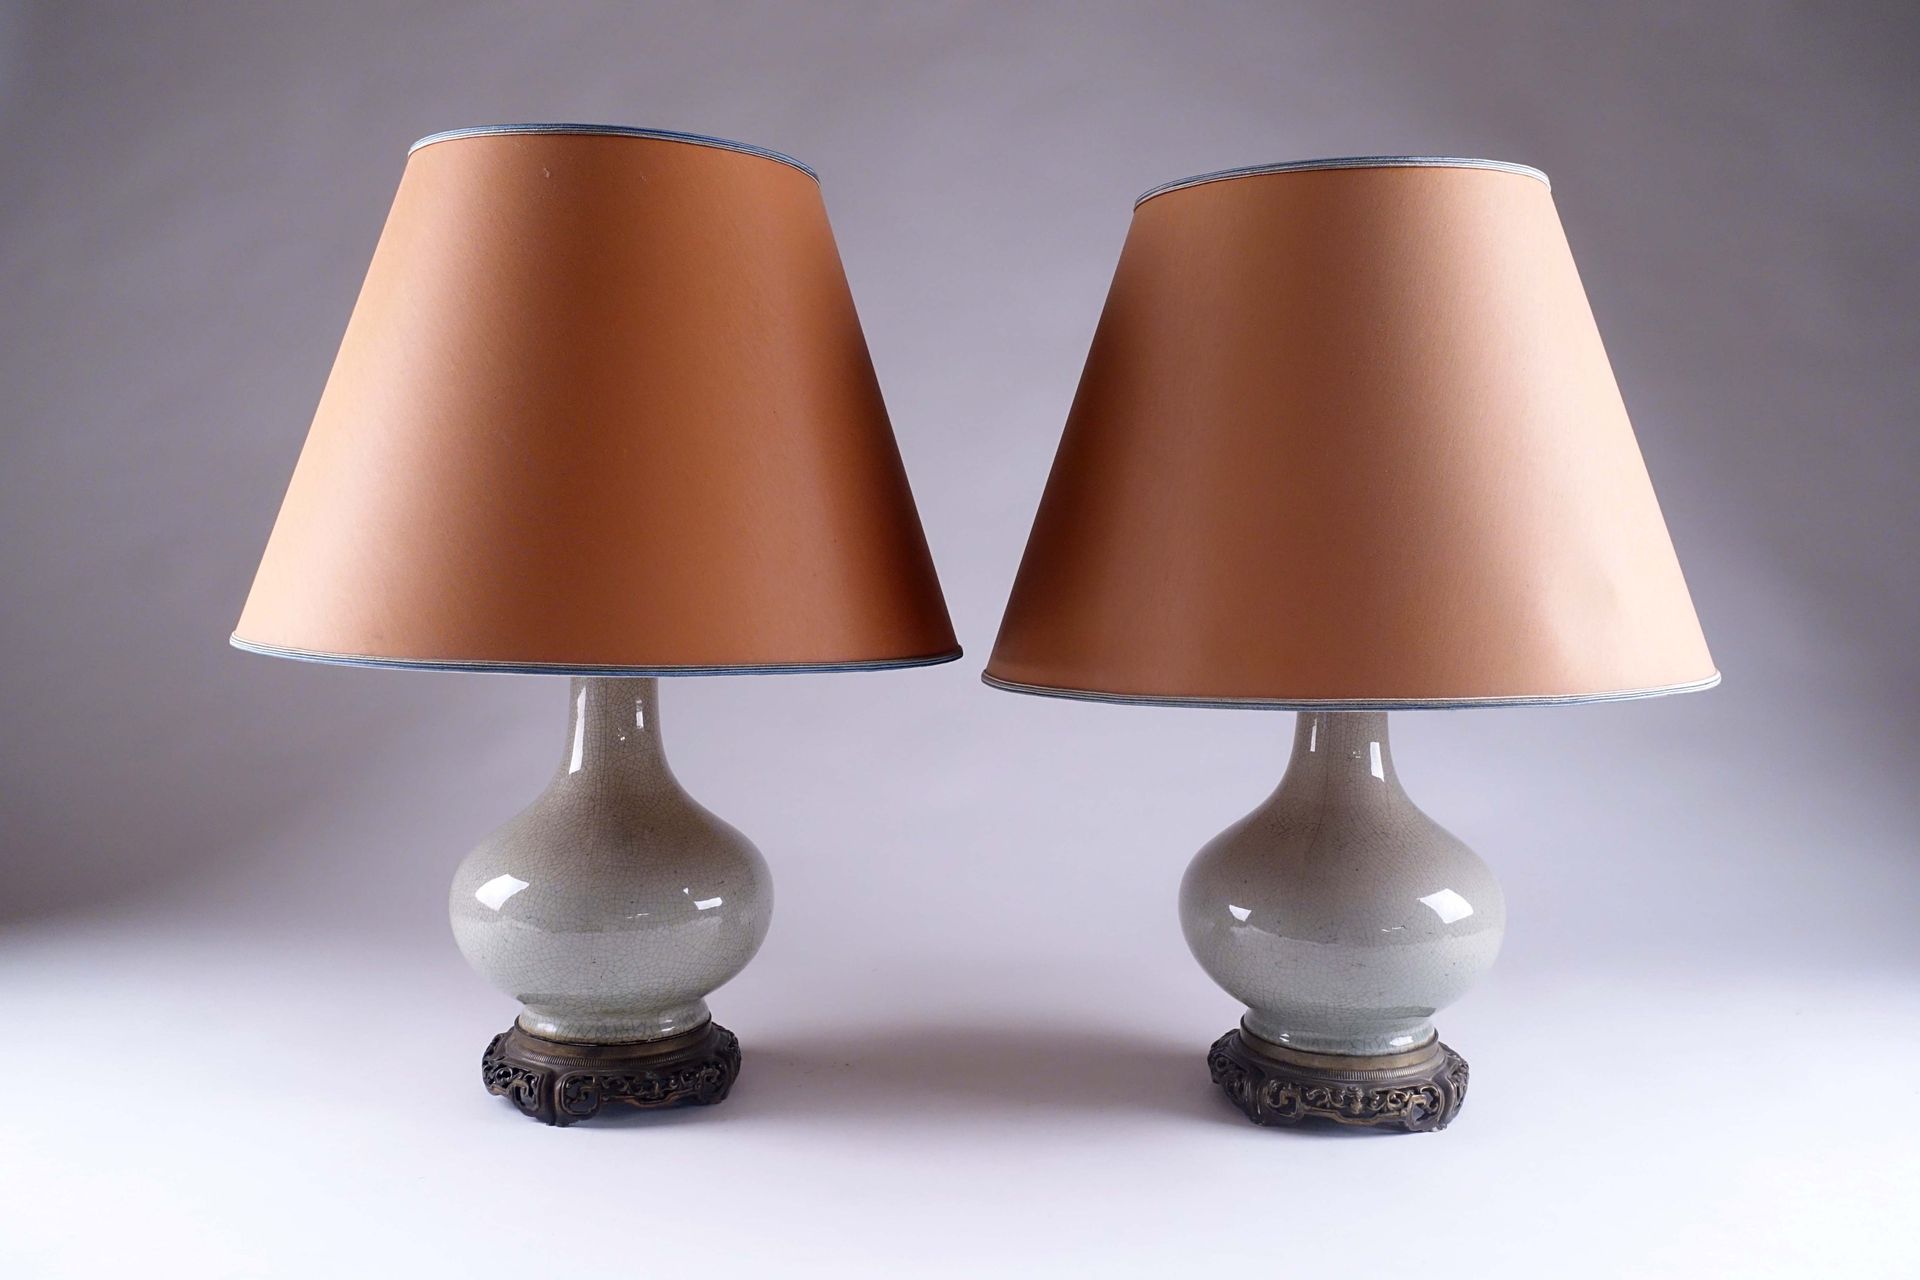 Chine - Fin du XIXe siècle, début du XXe siècle. Pair of vases mounted in lamp. &hellip;